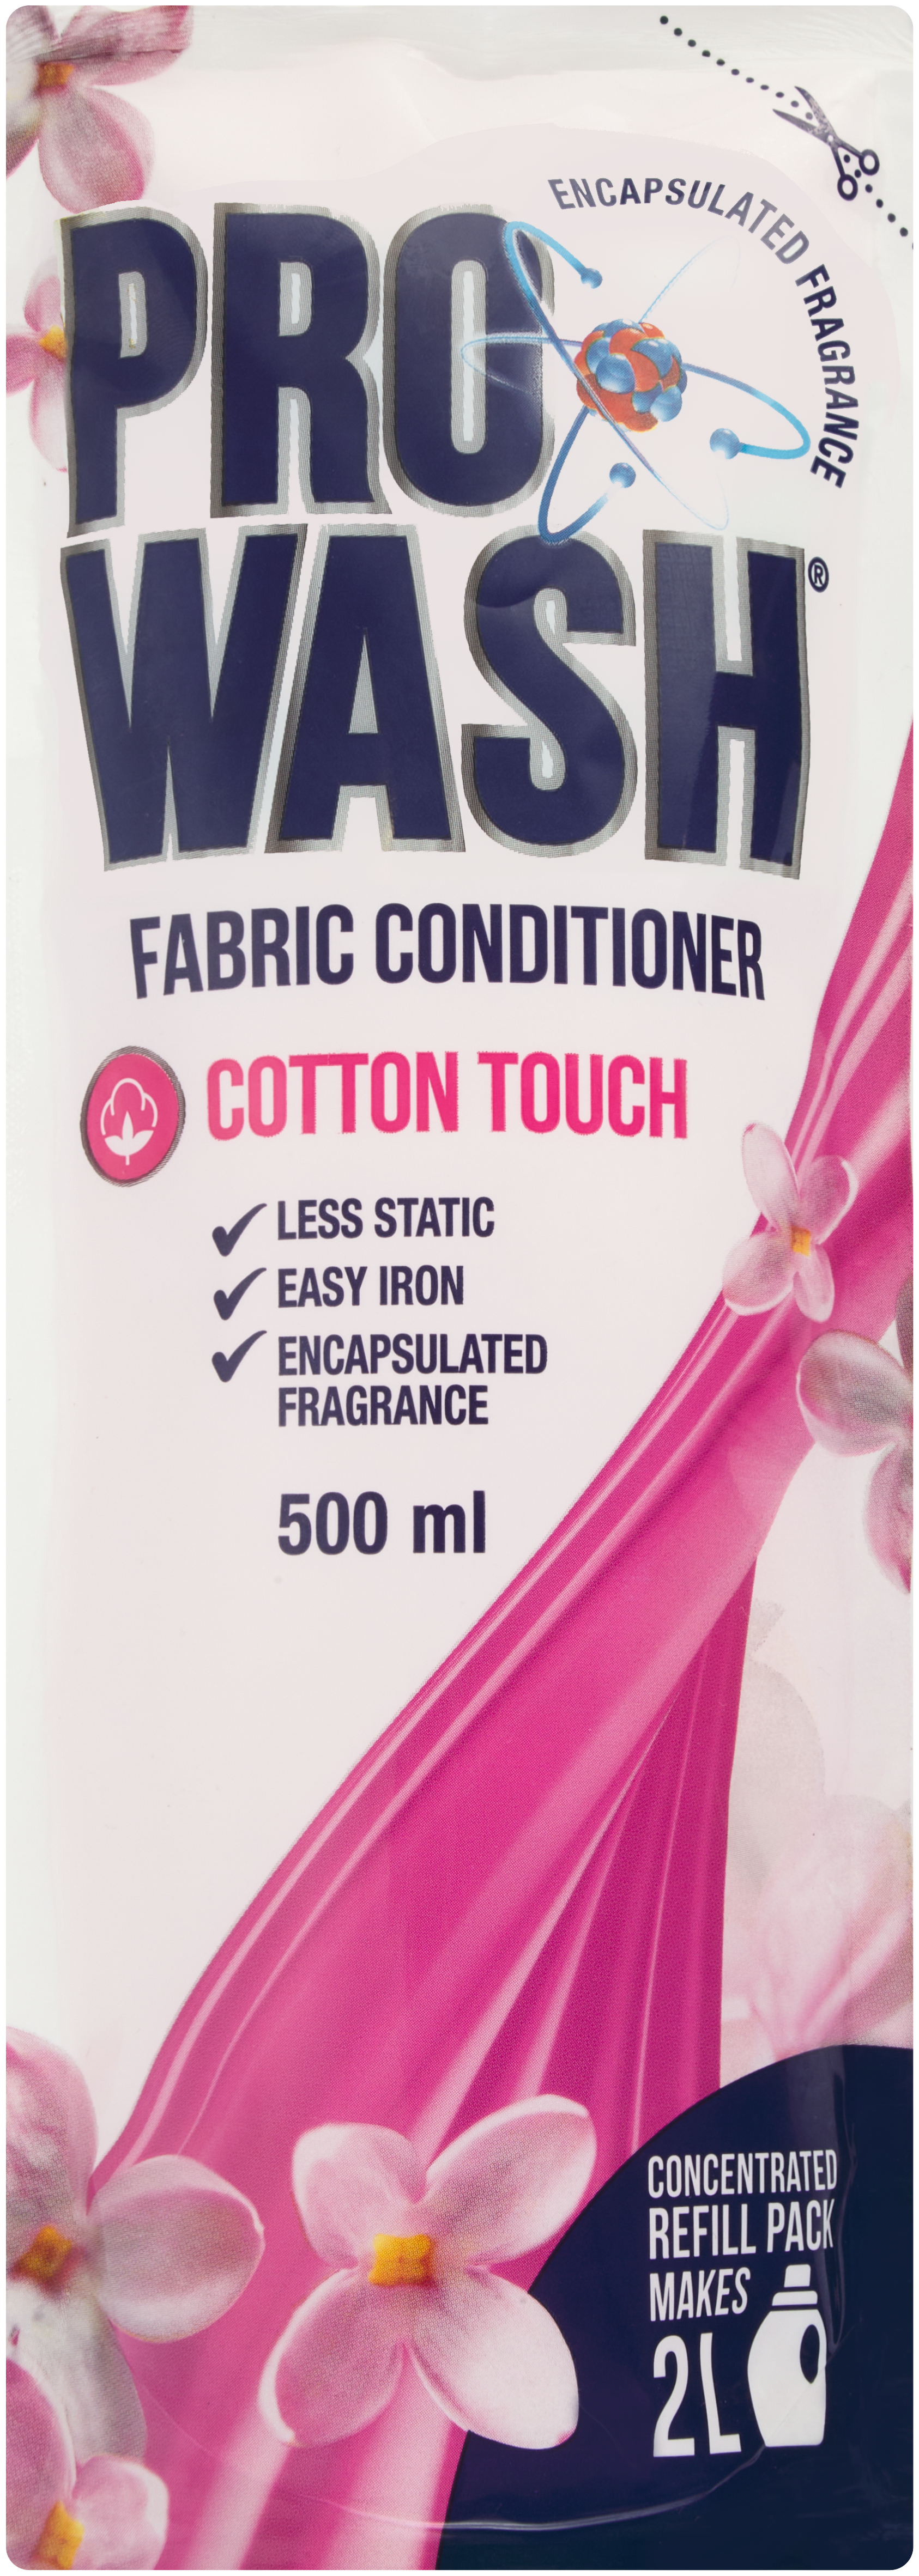 prowash fabric softener cotton touch